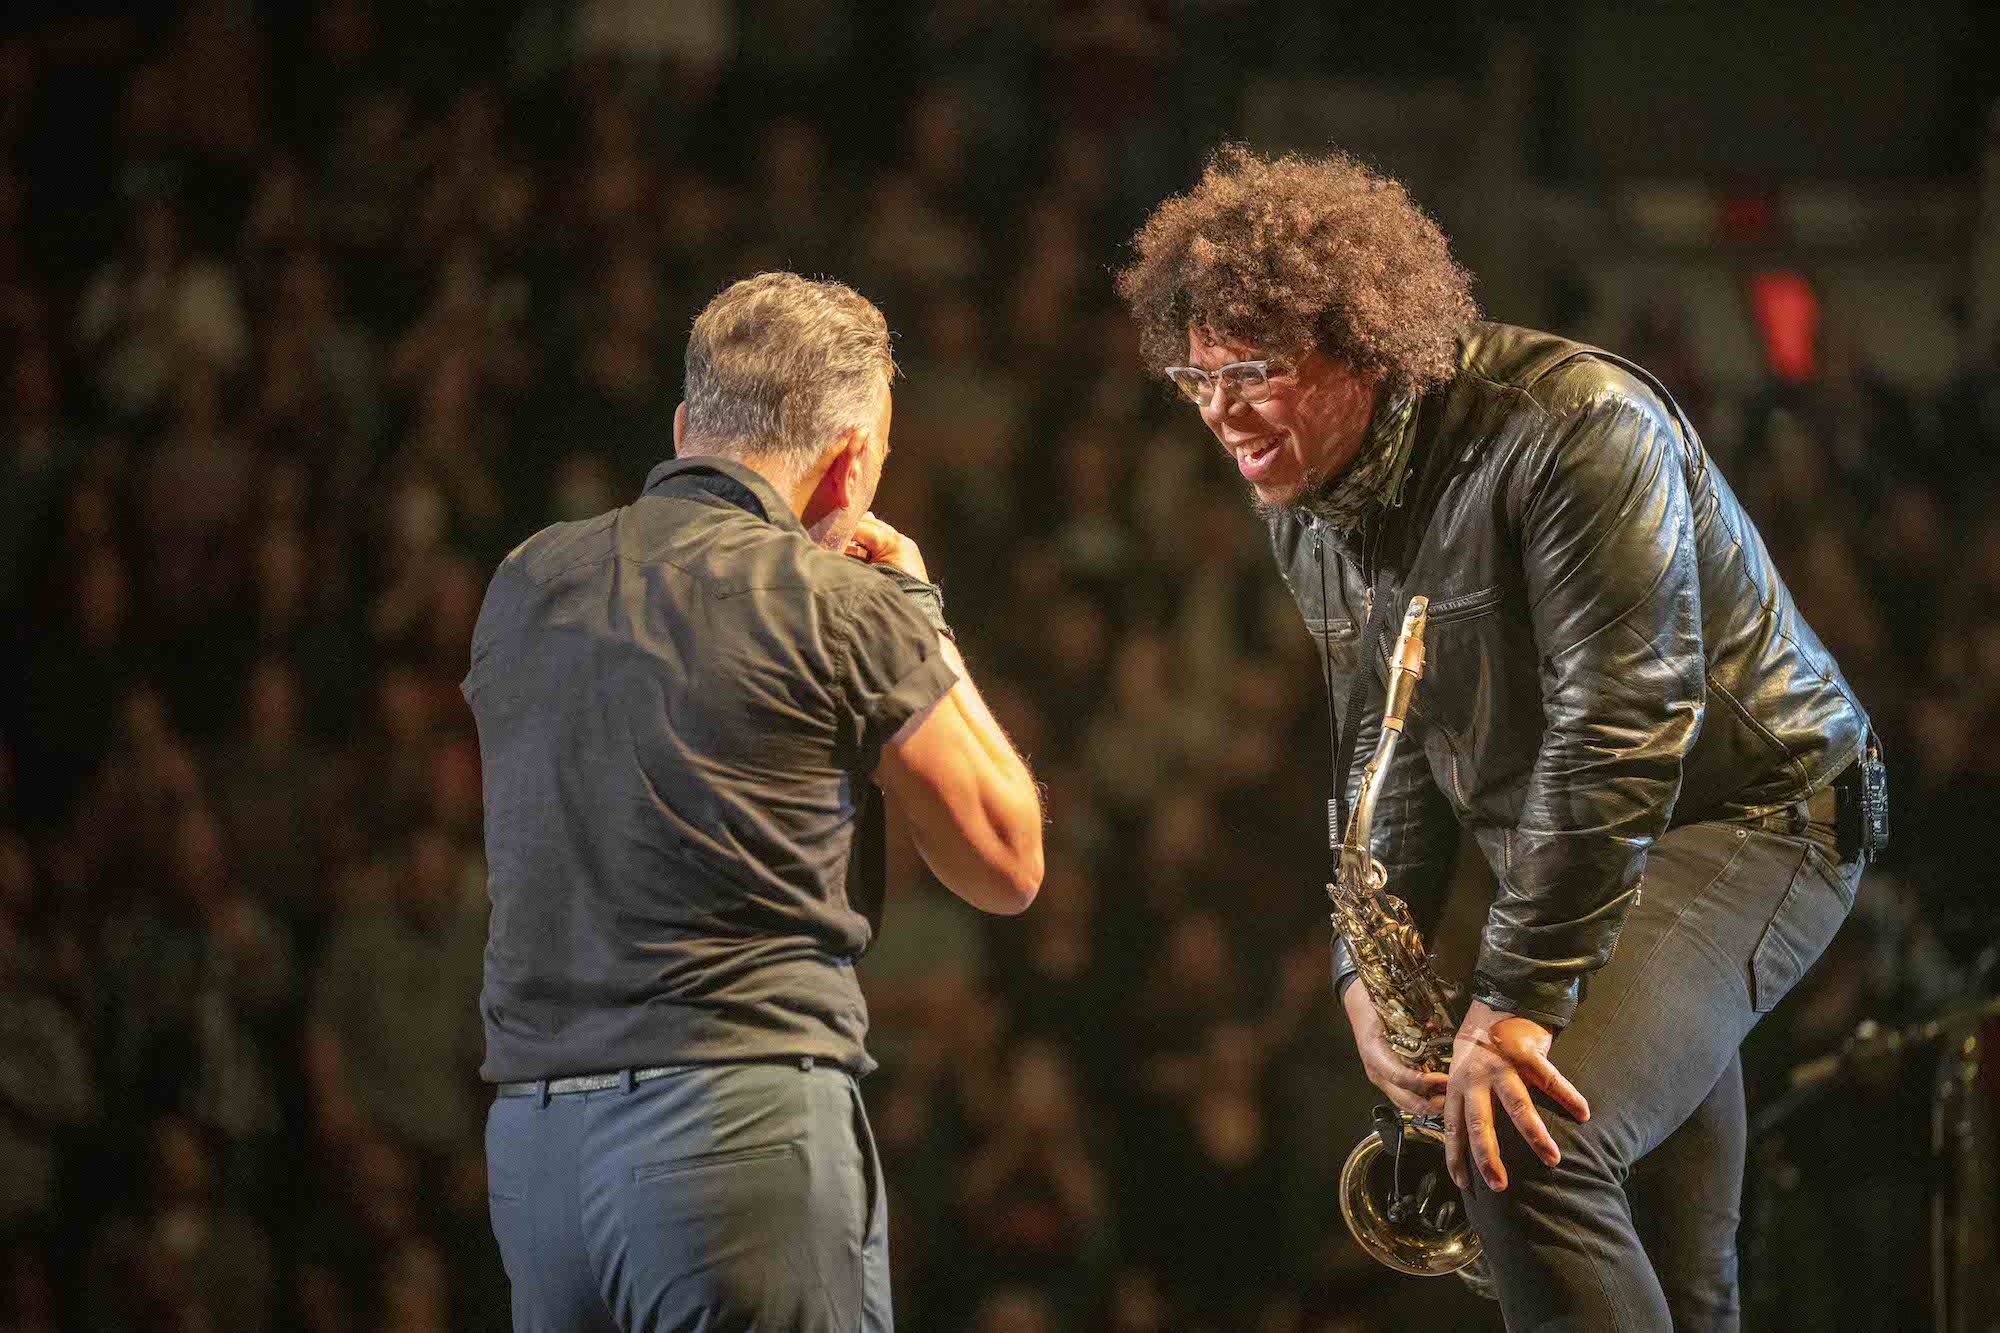 Bruce Springsteen & E Street Band at Moda Center, Portland, Oregon on February 25, 2023.